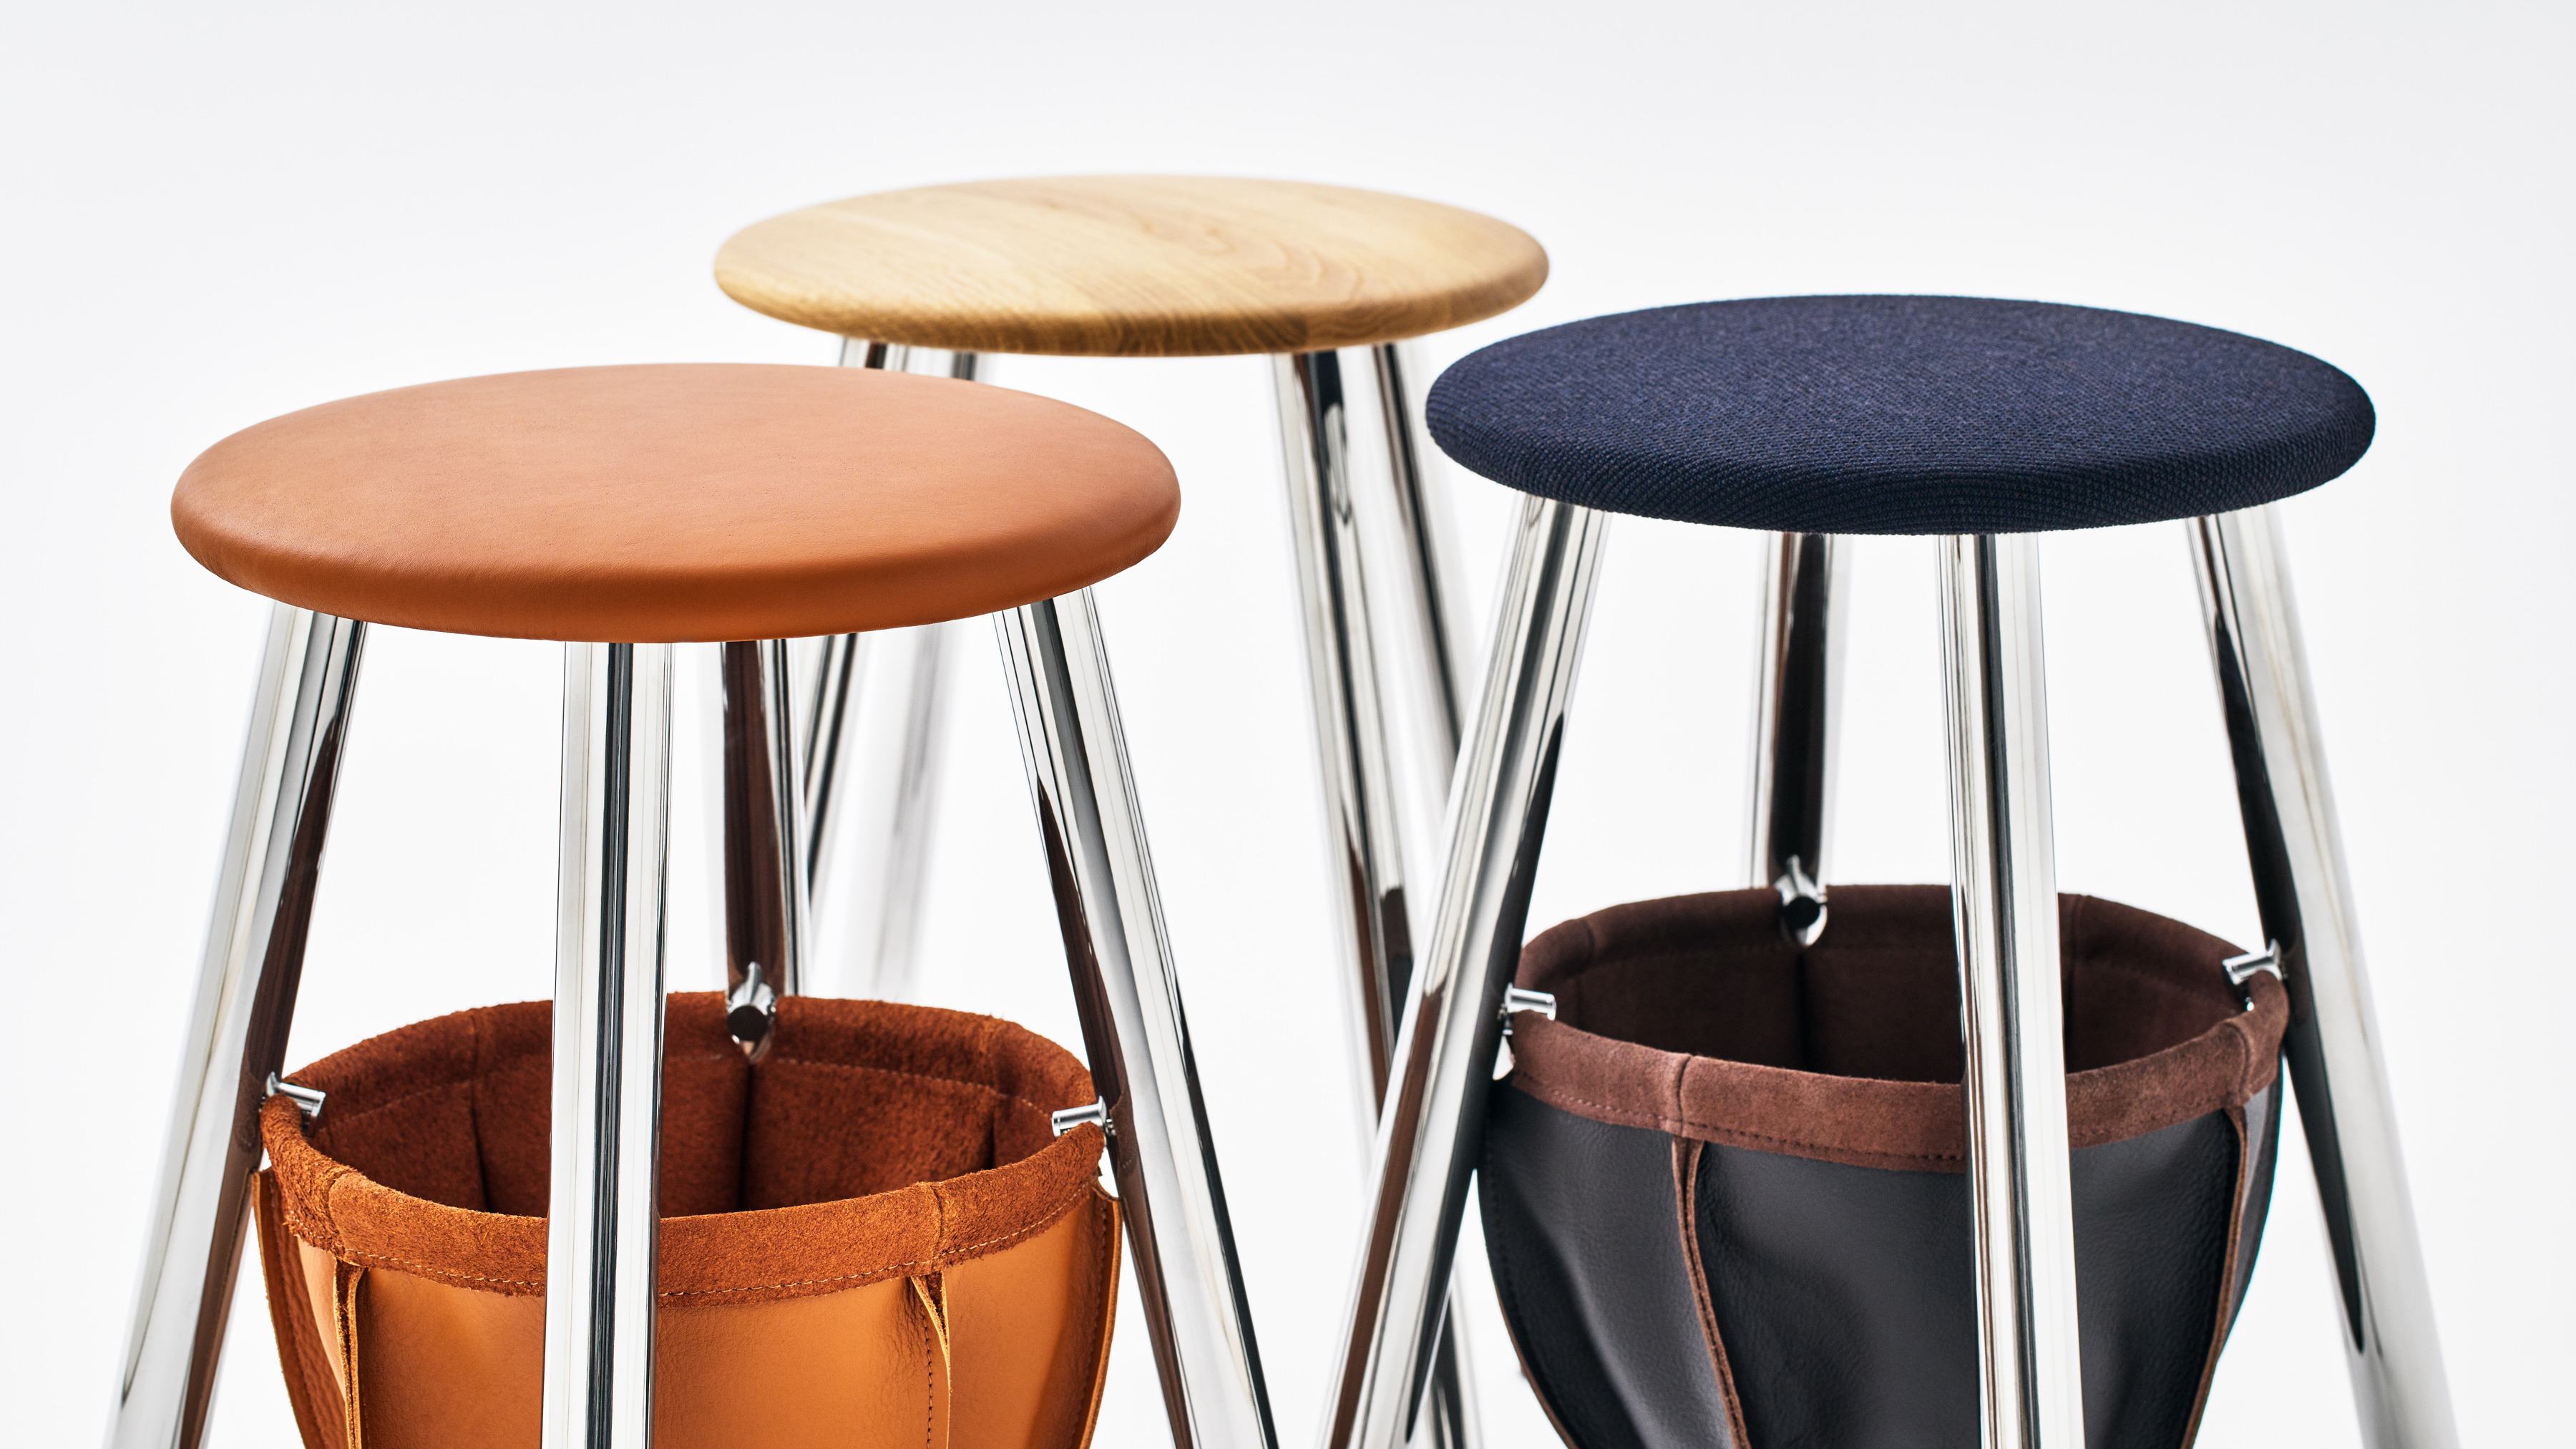 KON – Ideal small stools for entrances